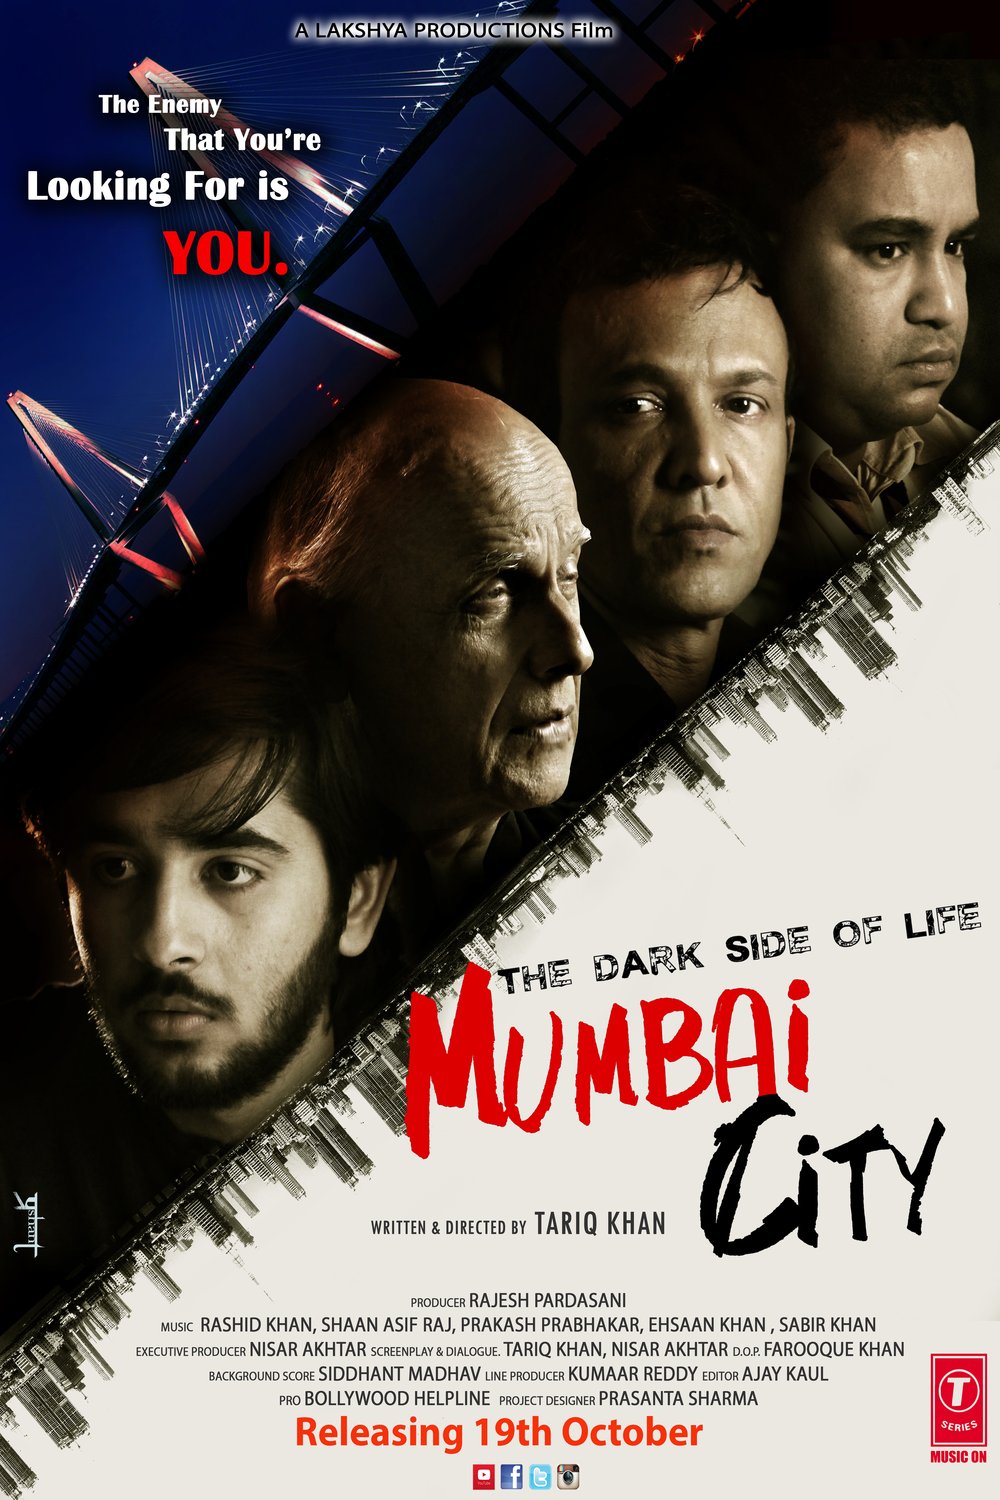 L'affiche originale du film The Dark Side of Life: Mumbai City en Hindi